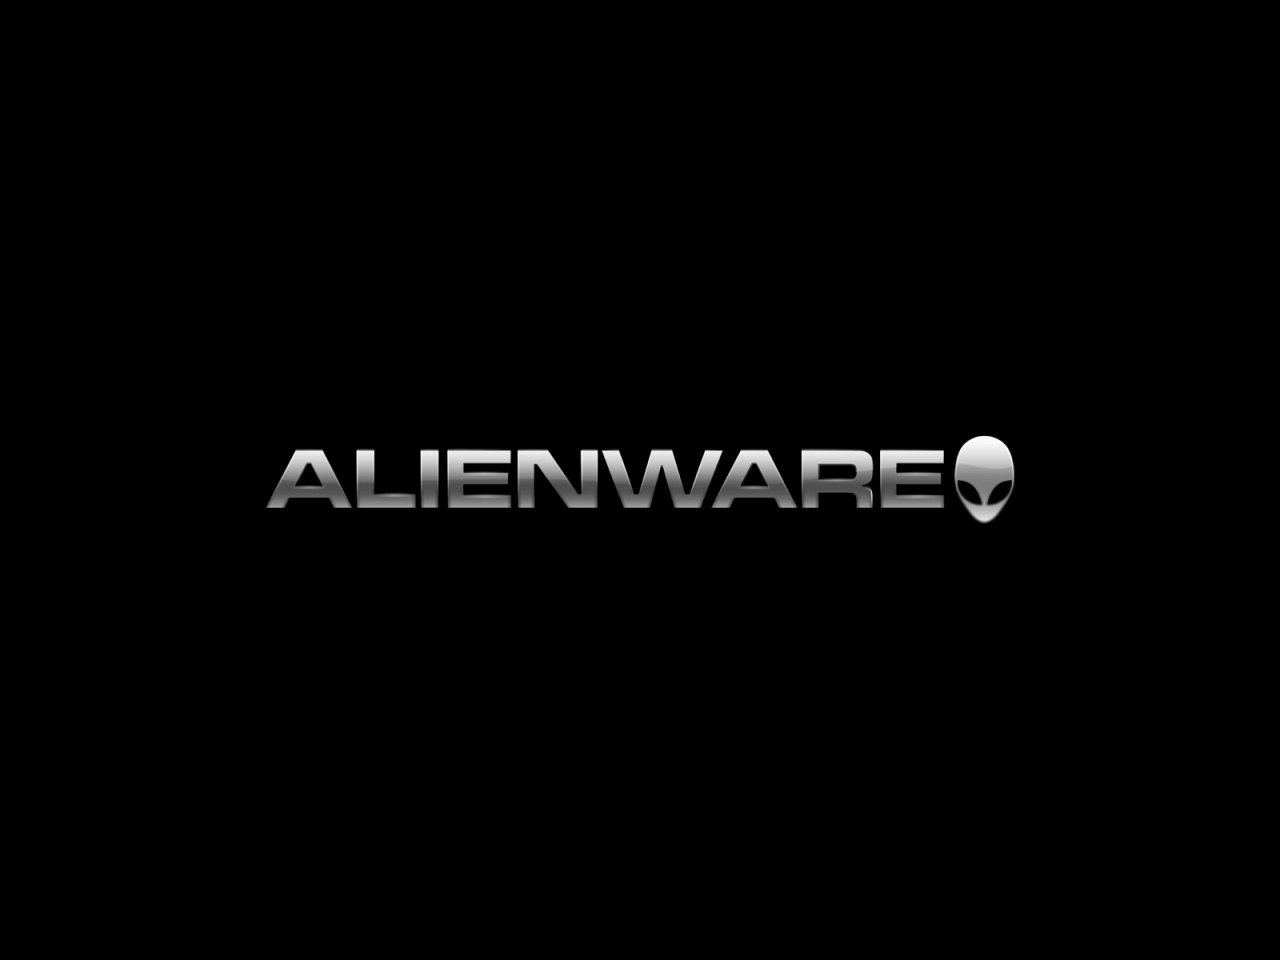 Black Alienware for 1280 x 960 resolution